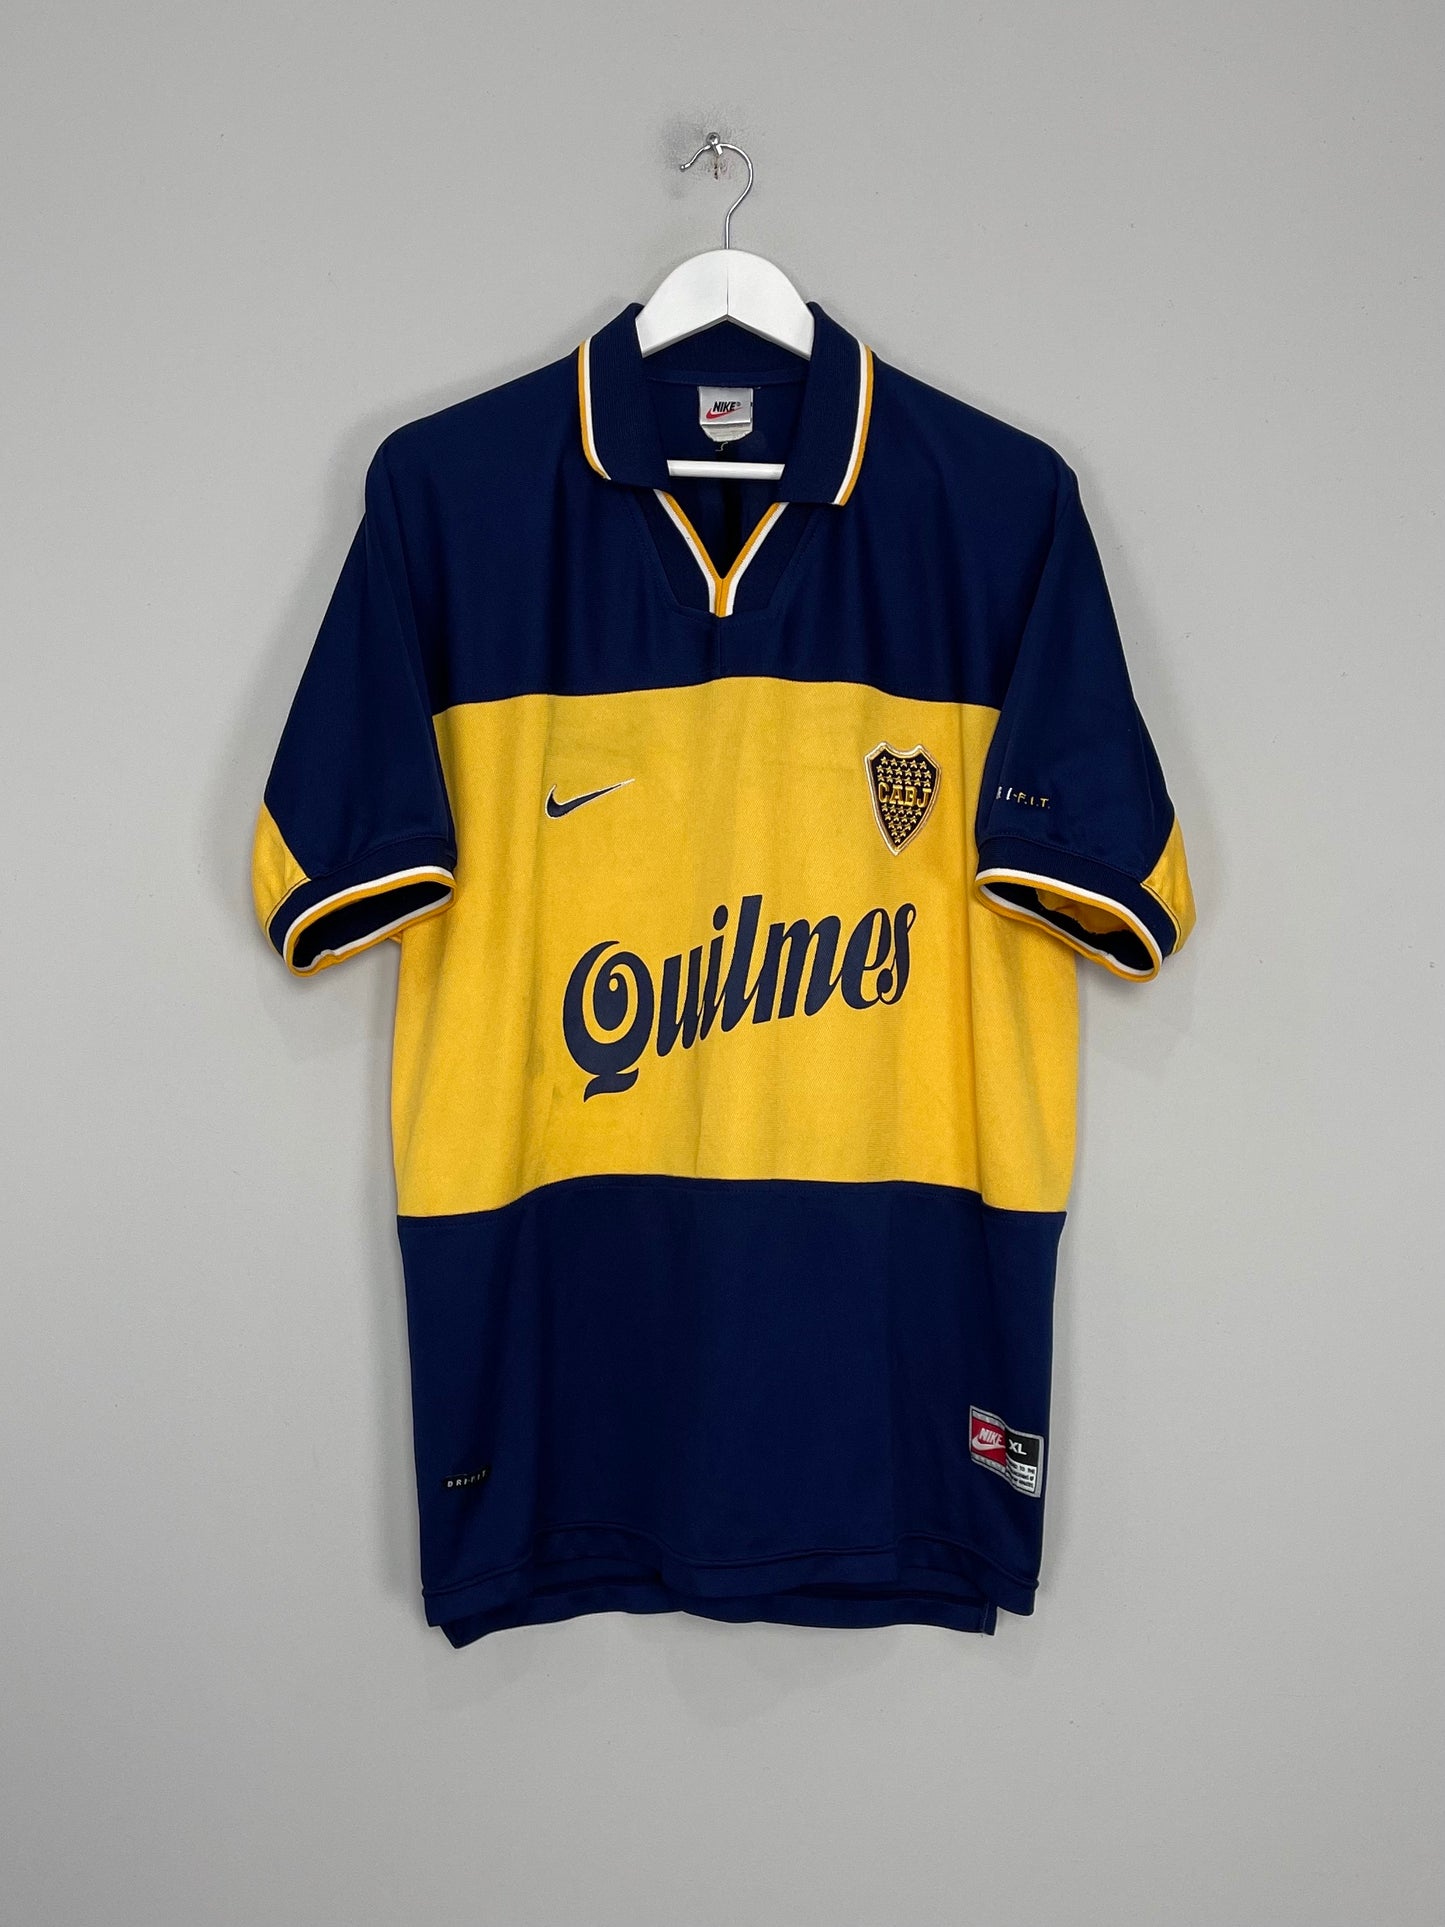 Image of the Boca Juniors shirt from the 1998/99 season